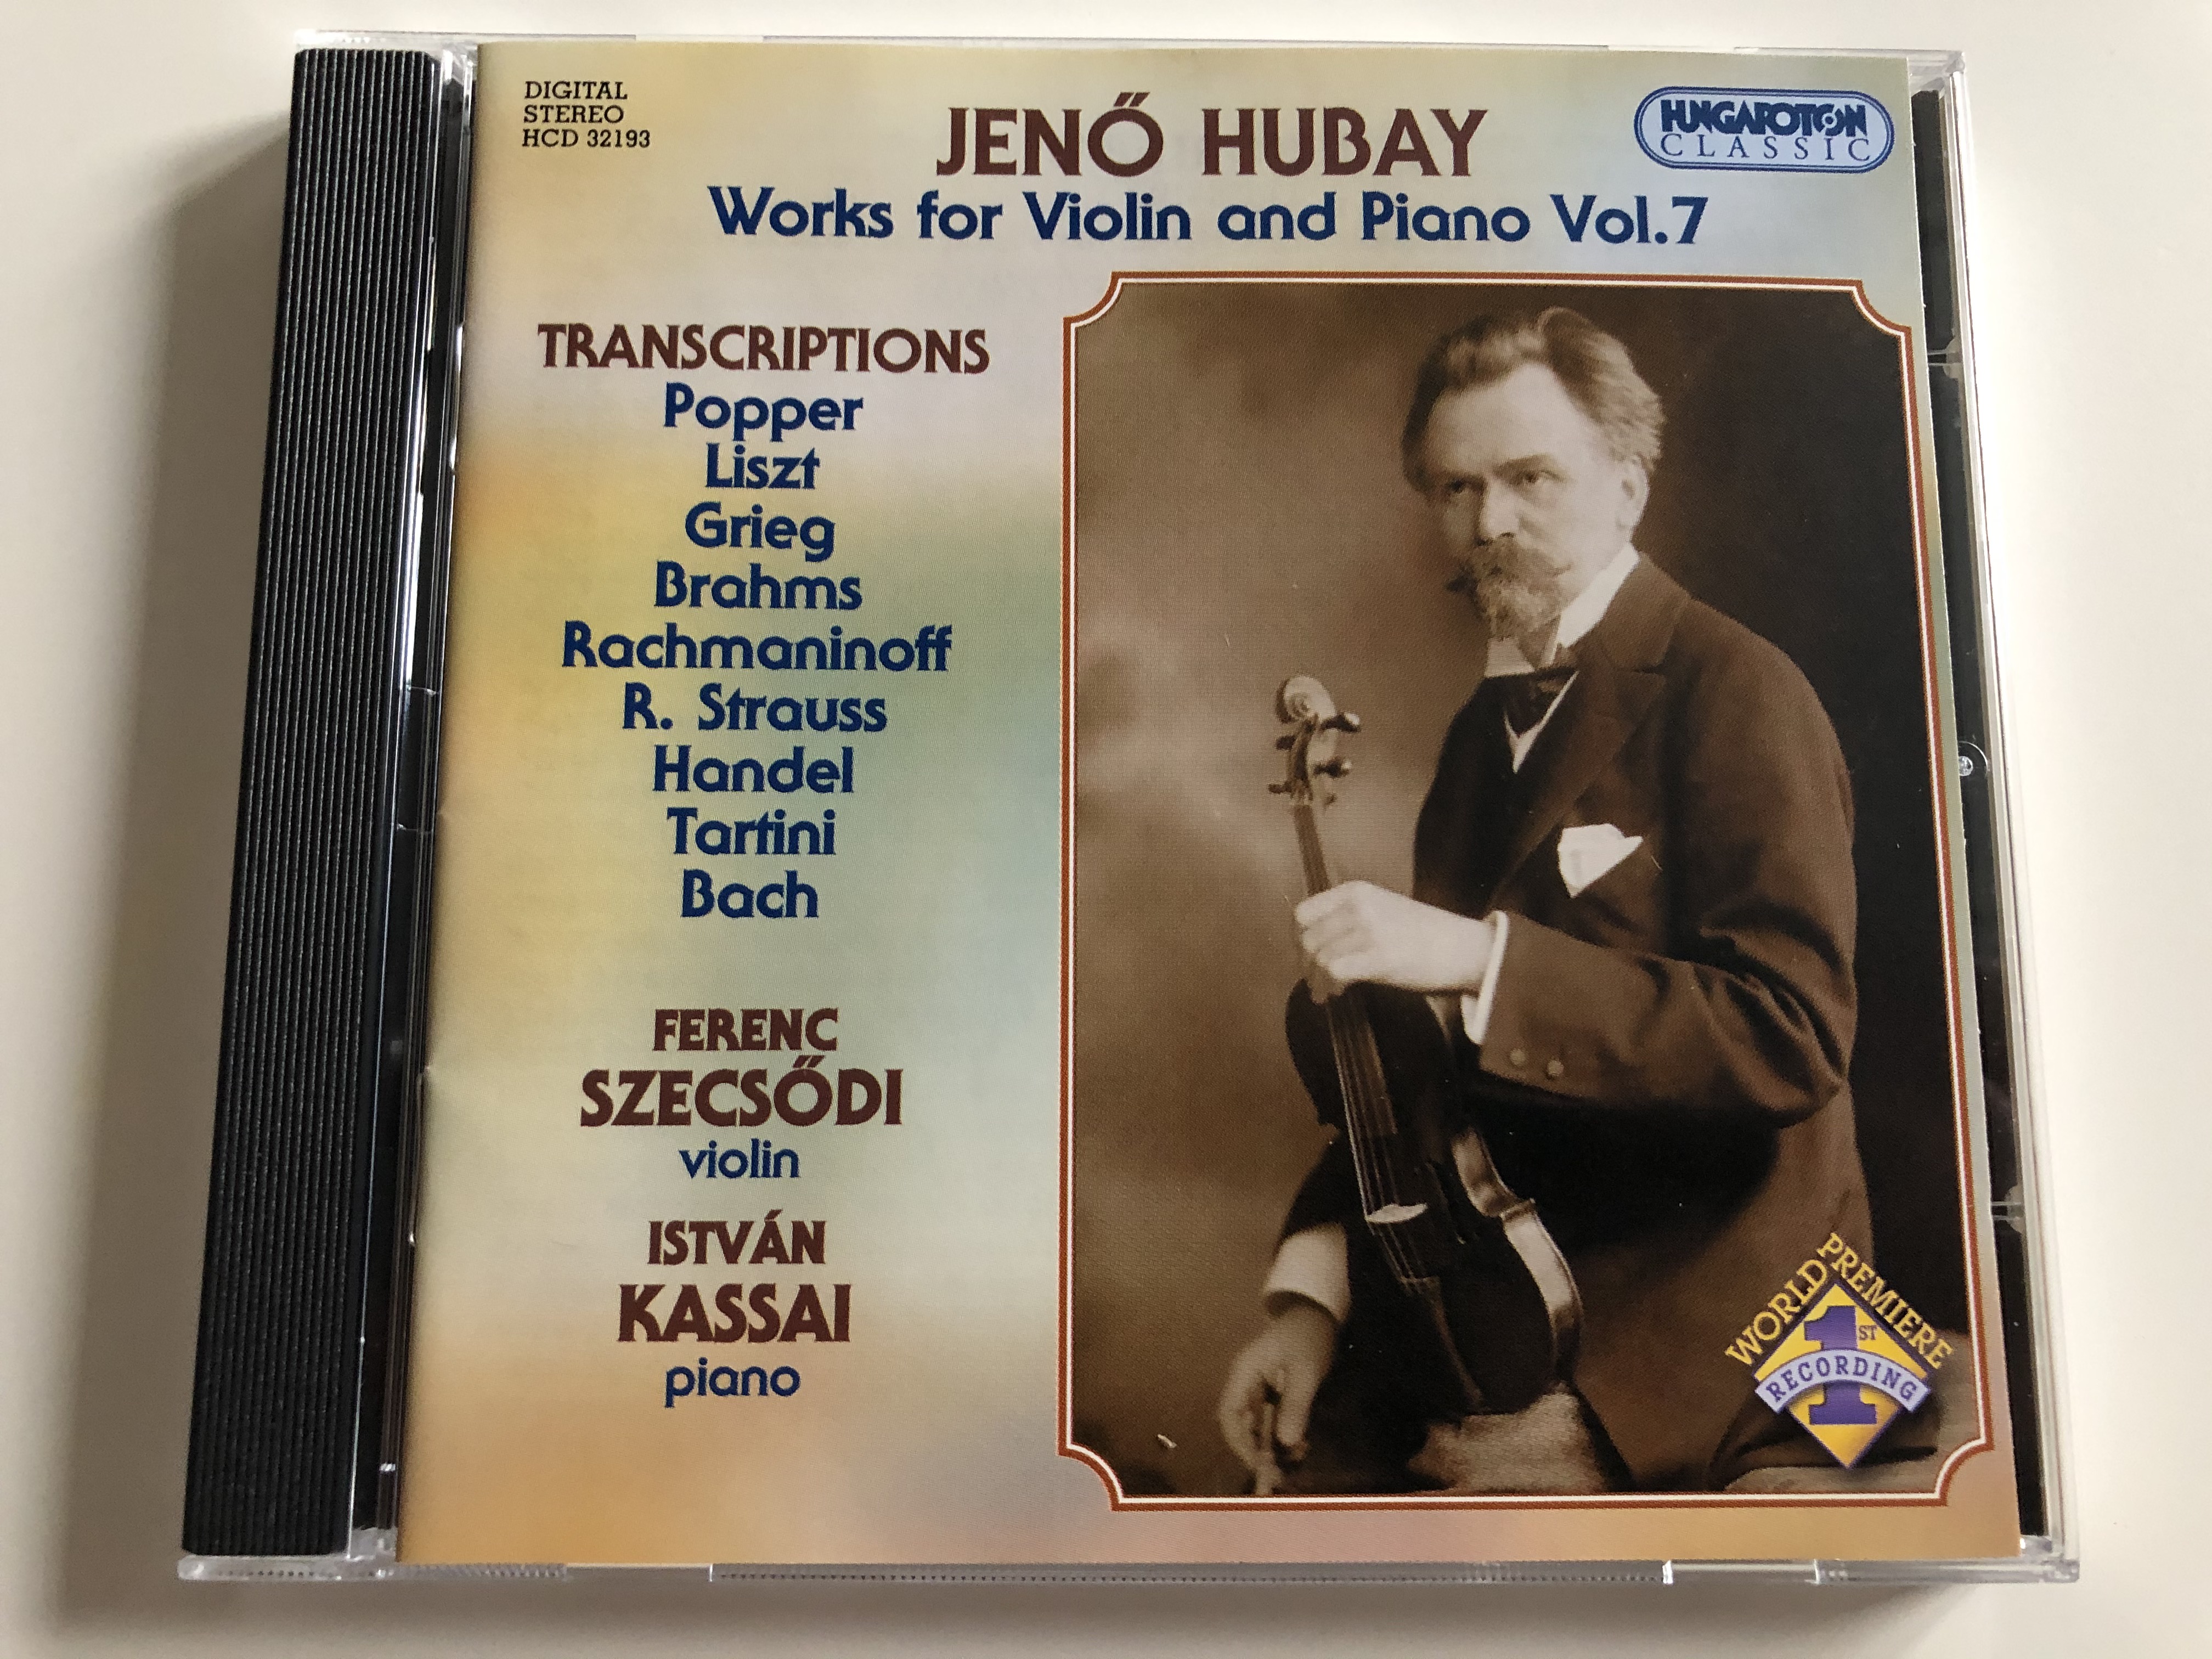 jen-hubay-works-for-violin-and-piano-vol.-7-transcriptions-popper-liszt-grieg-brahms-rachmaninoff-r.-strauss-handel-tartini-bach-violin-ferenc-szecsodi-piano-istvan-kassai-hungar-1-.jpg